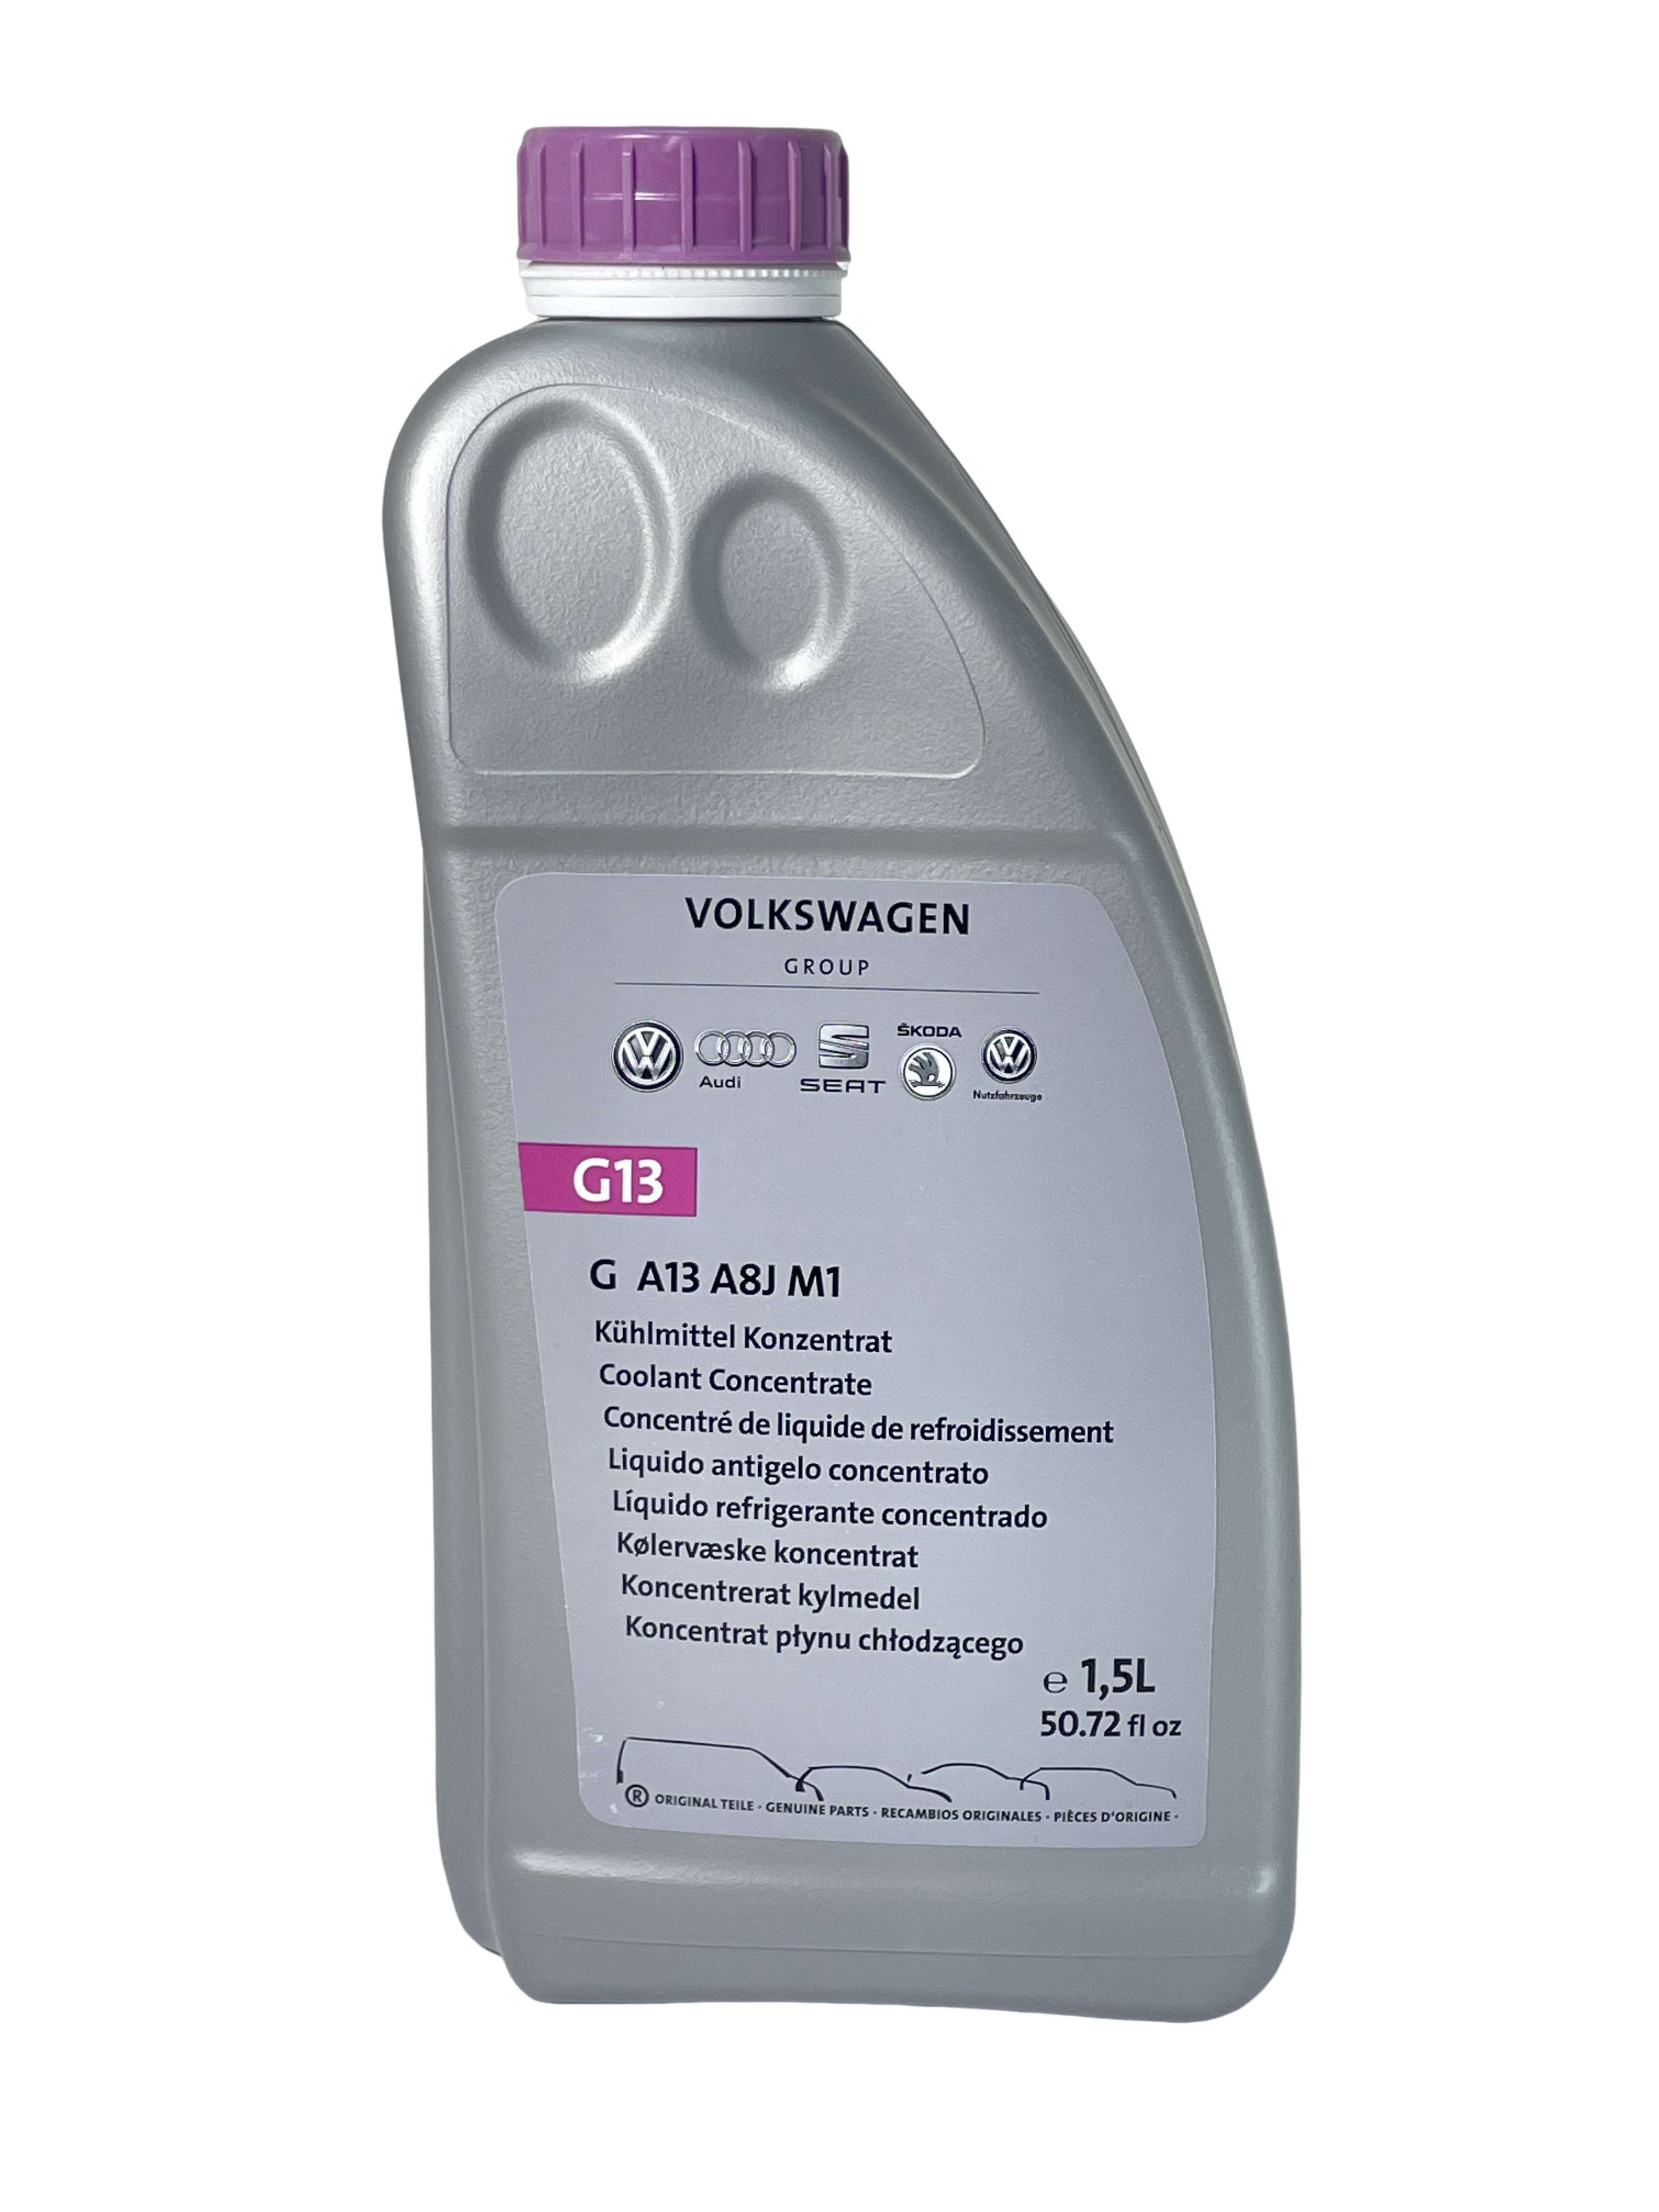 Anticongelante G13 puro ORIGINAL Grupo Volkswagen GA13A8JM1, 1.5L